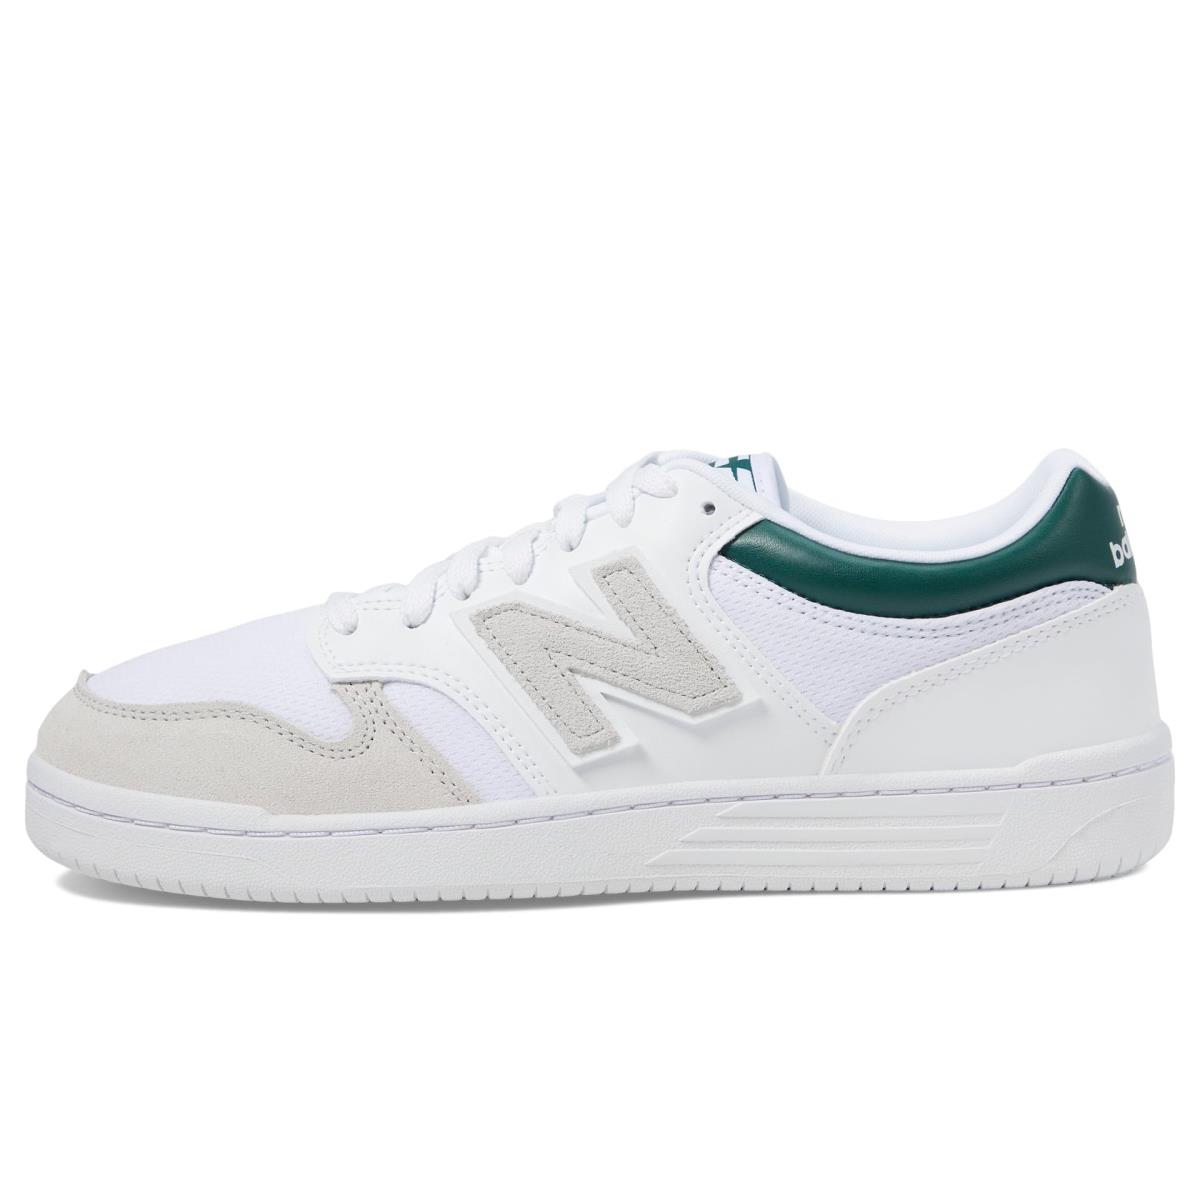 New Balance Unisex-adult BB480 V1 Court Sneaker White/Nightwatch Green